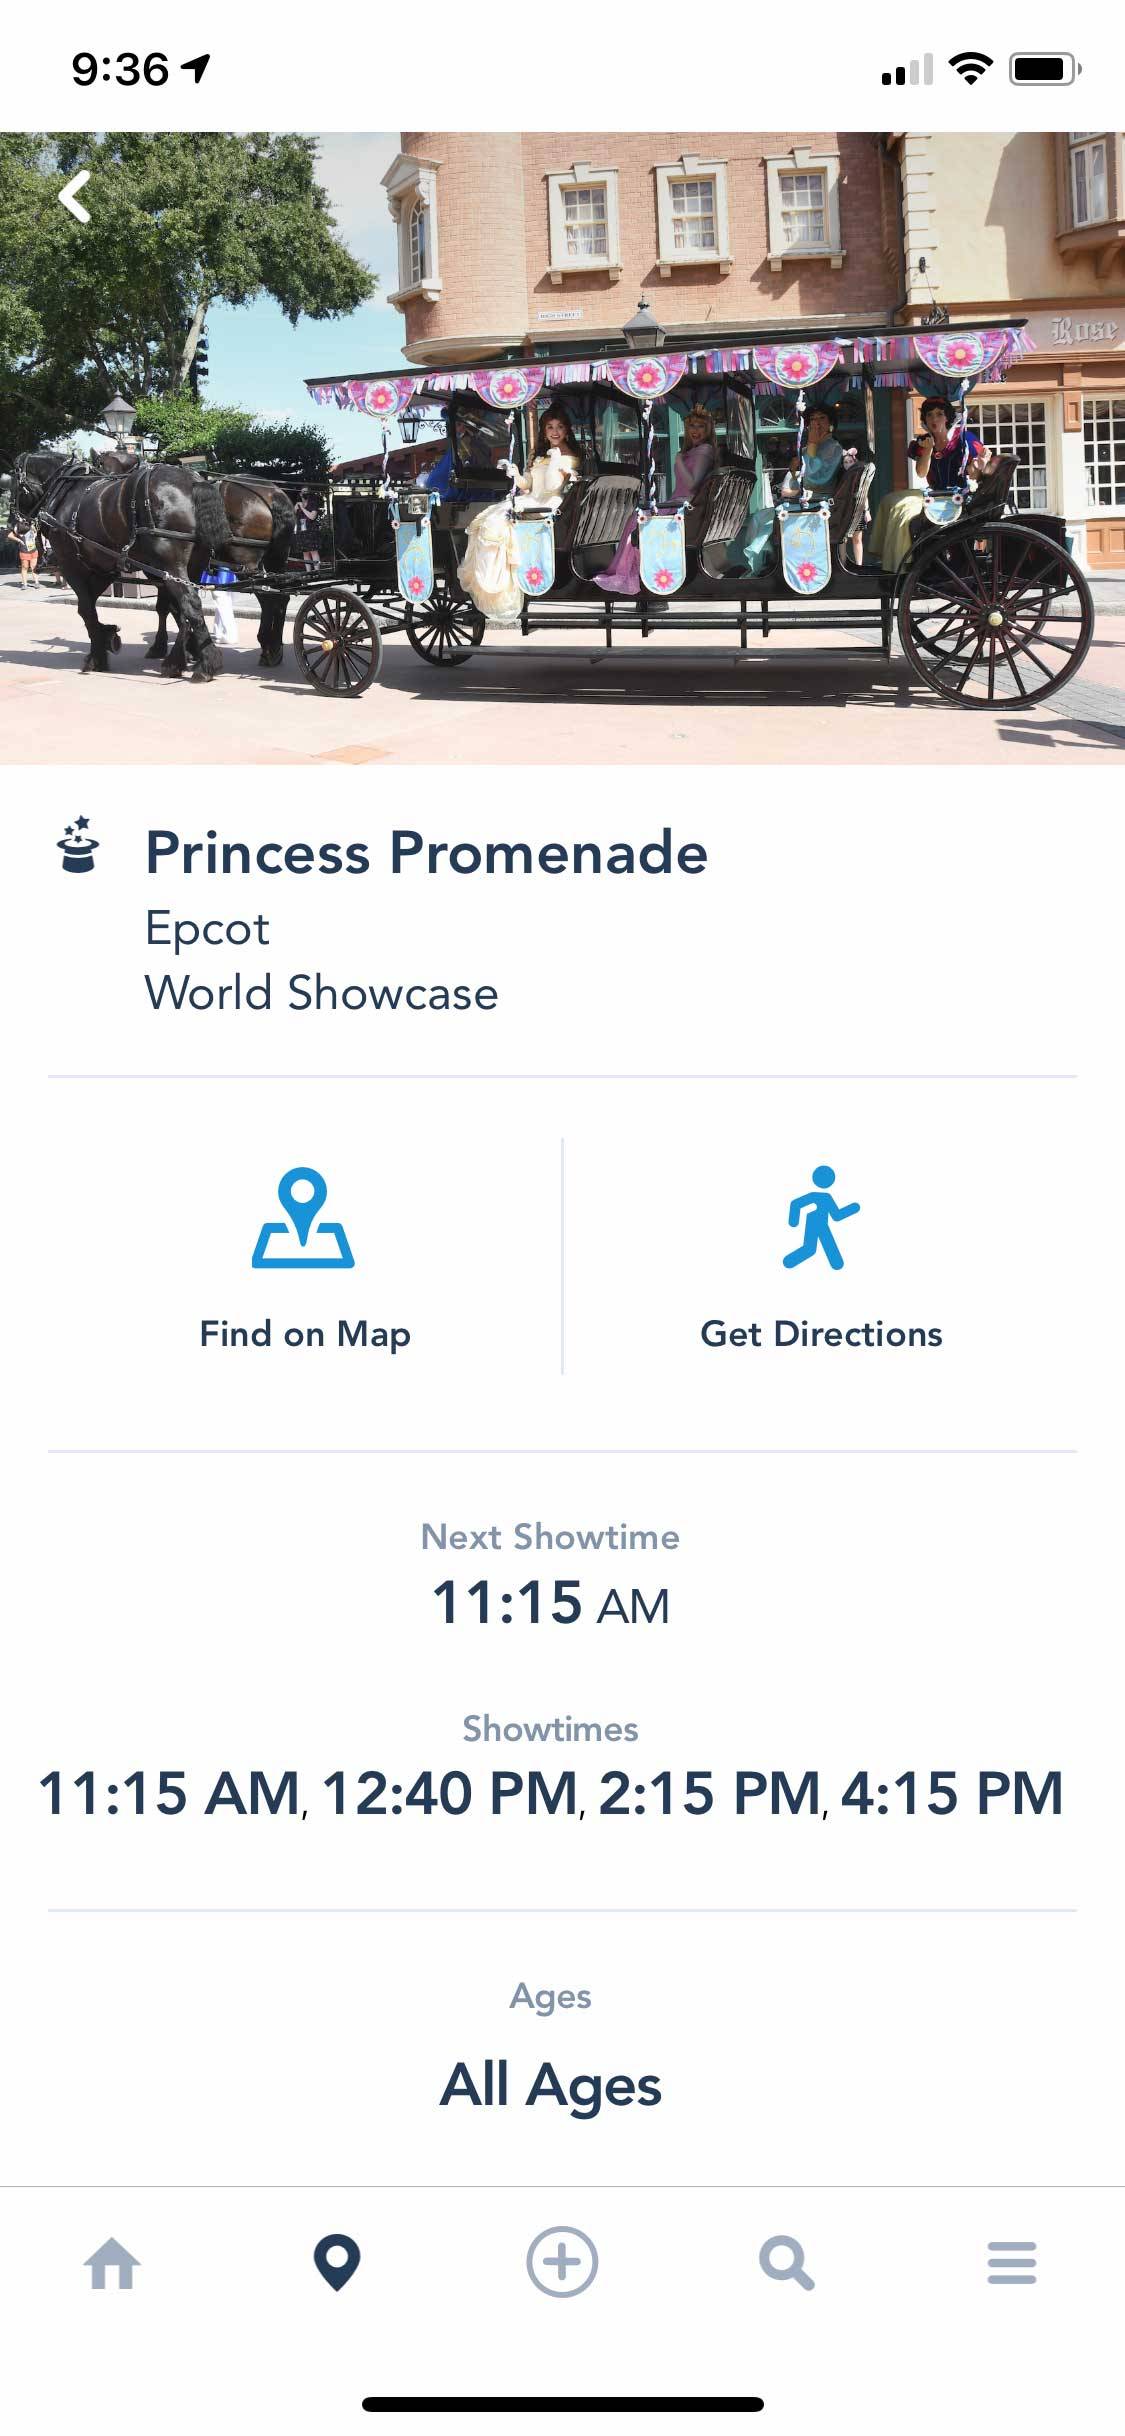 Screenshot from My Disney Experience - &nbsp;Princess Promenade cavalcade showtimes